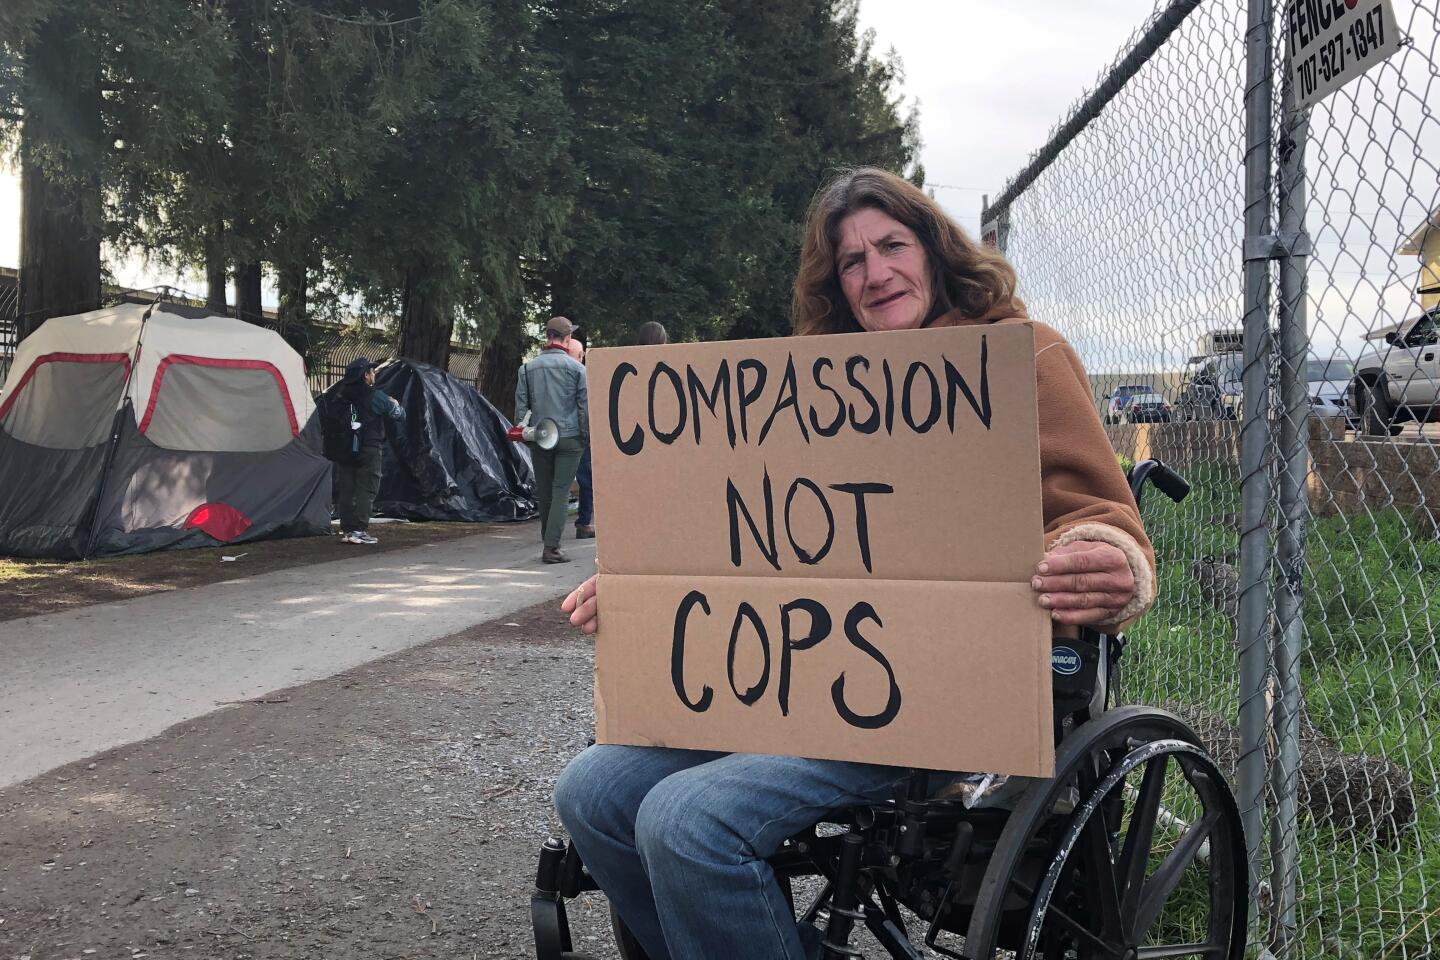 Joe Rodata homeless encampment, Sonoma County